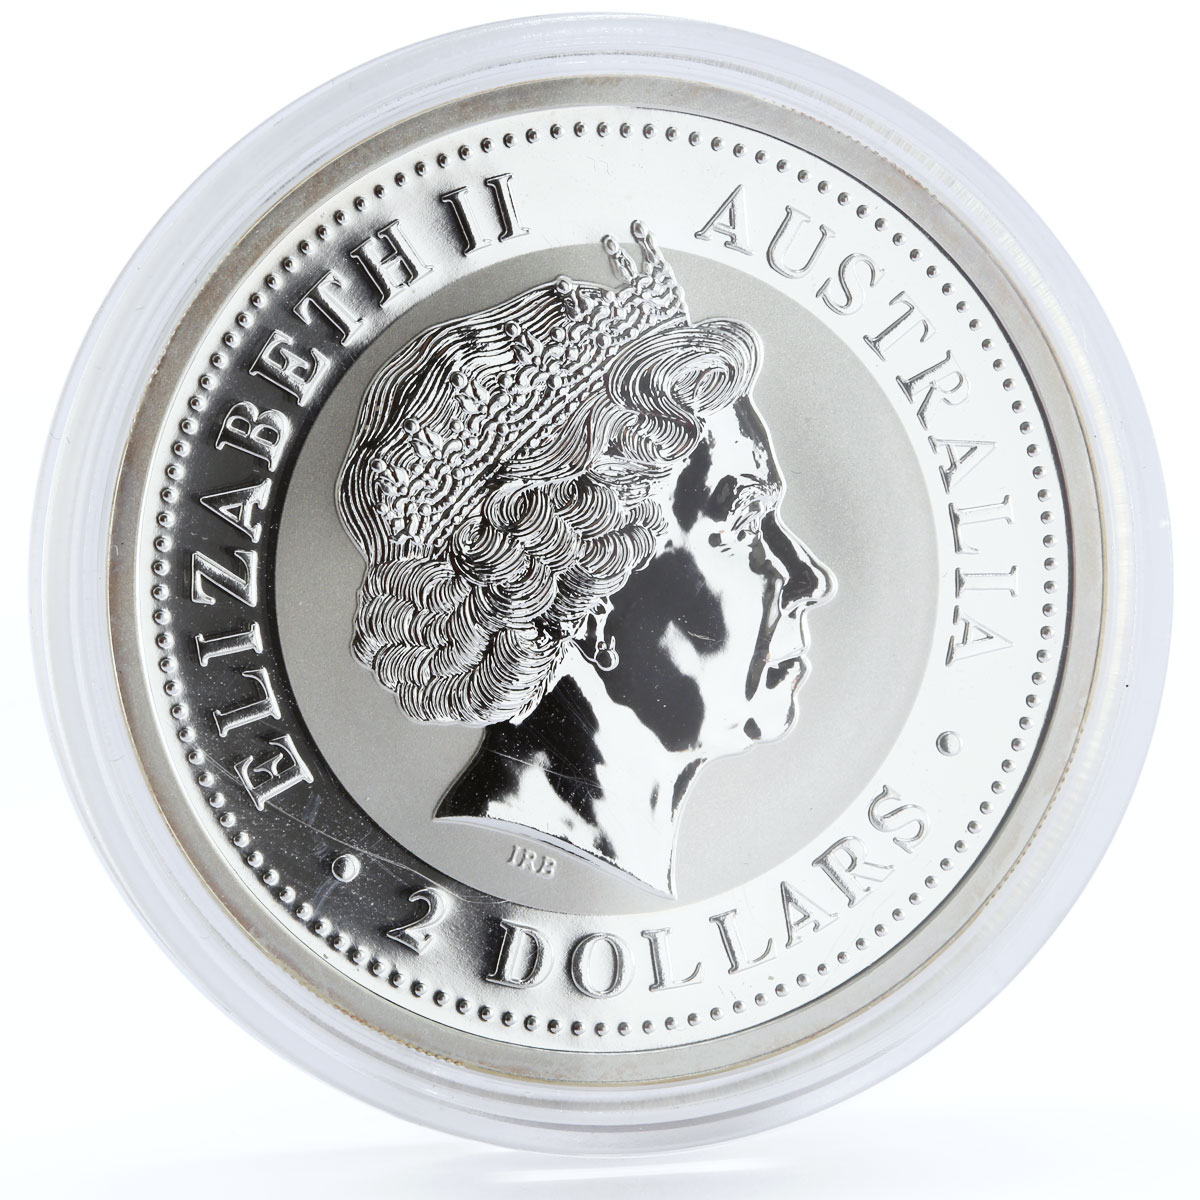 Australia 2 dollars Lunar Calendar series I Year of the Dragon silver coin 2000